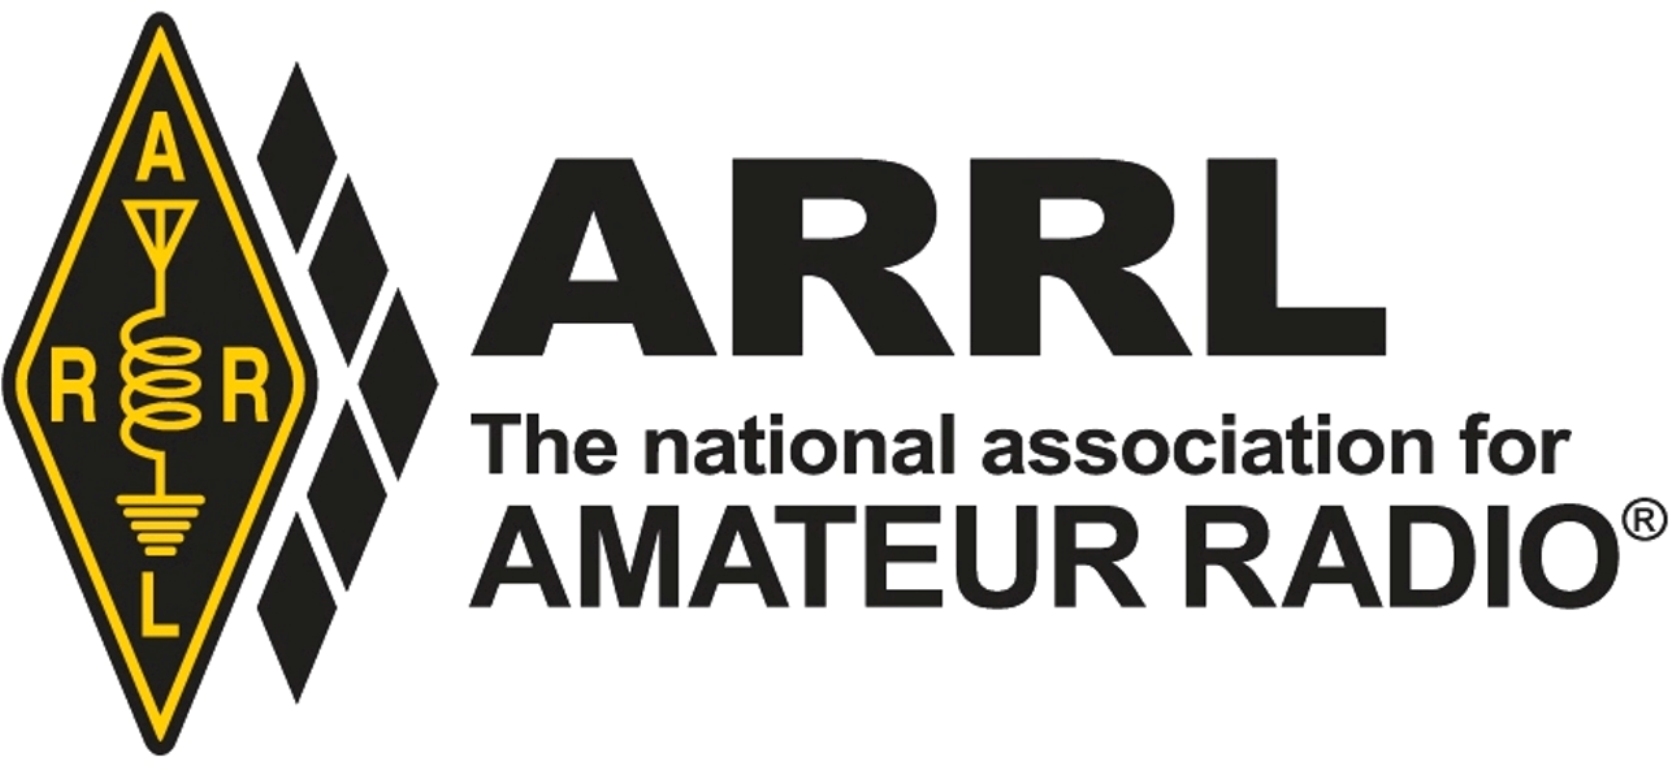 ARRLlogoandlogotype2016_8 Hermiston Amateur Radio Club